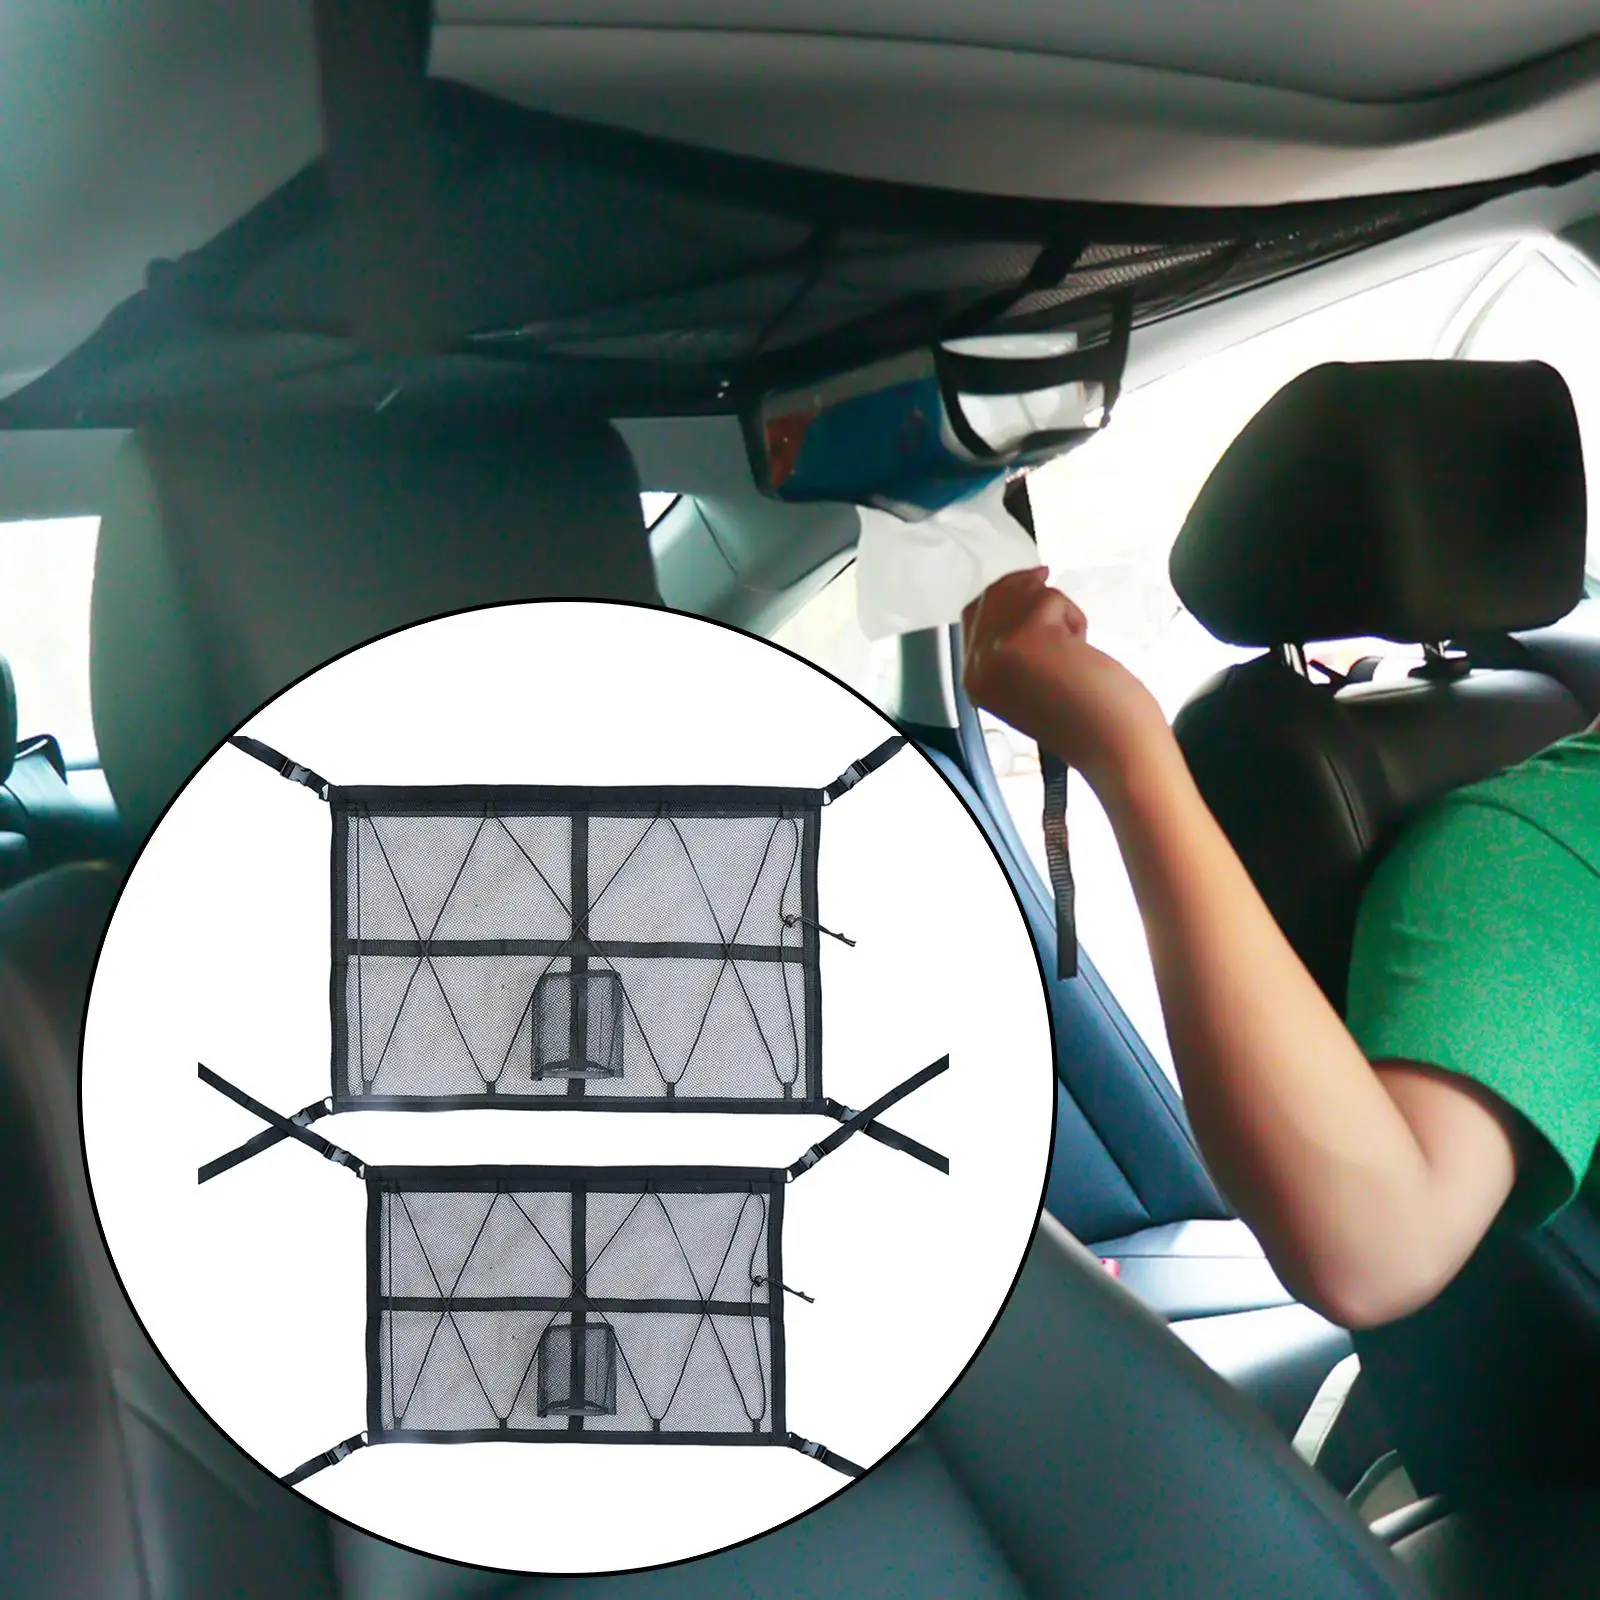 Car Trunk Organizer Interior Adjustable for SUV Net Breathable Elastic Van